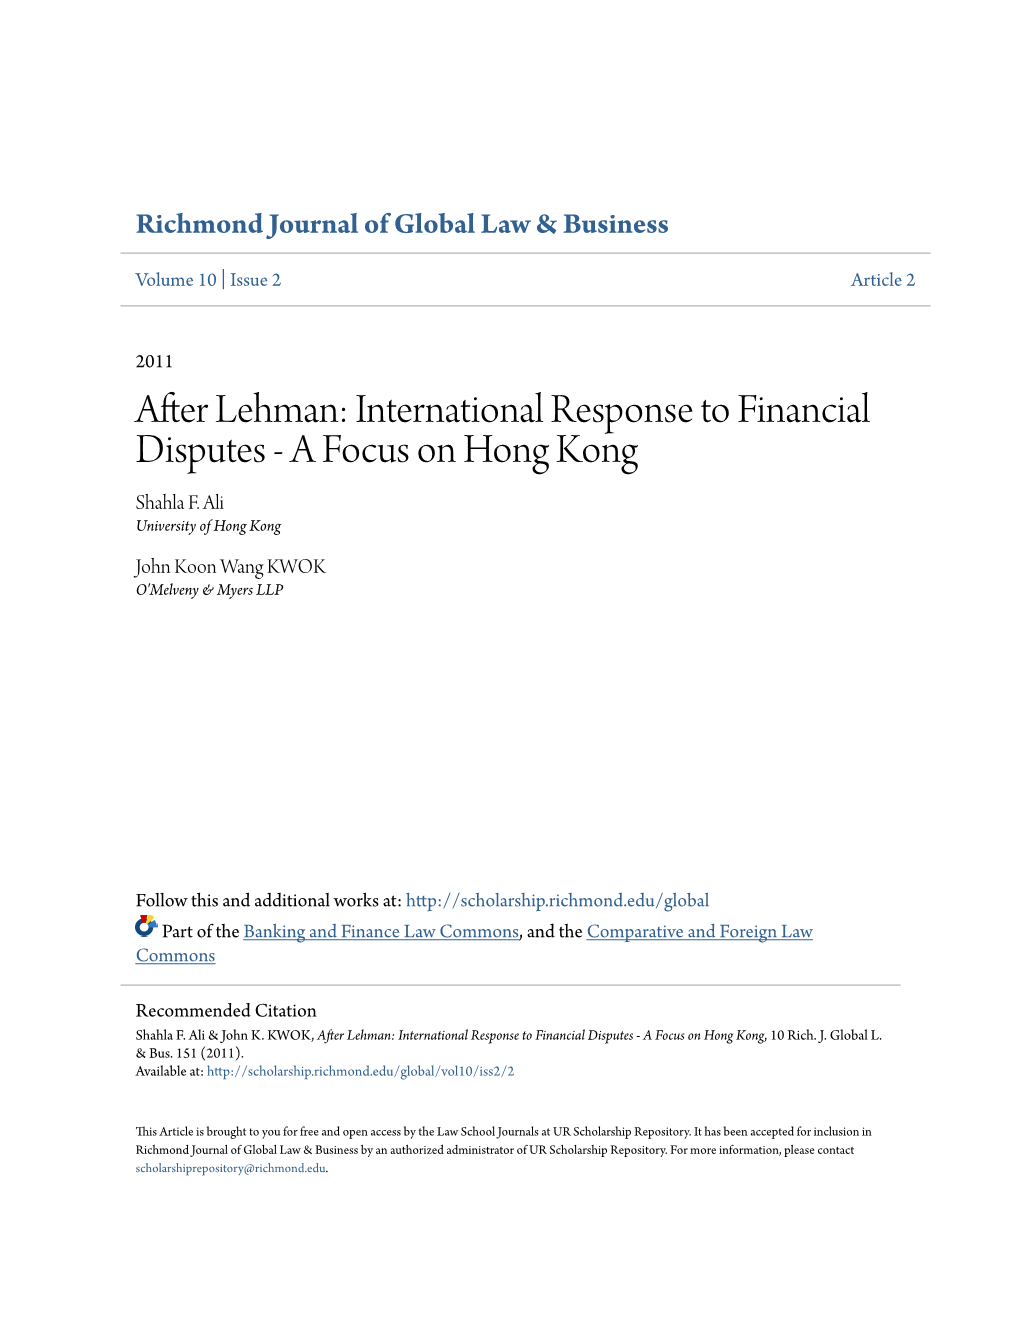 International Response to Financial Disputes - a Focus on Hong Kong Shahla F